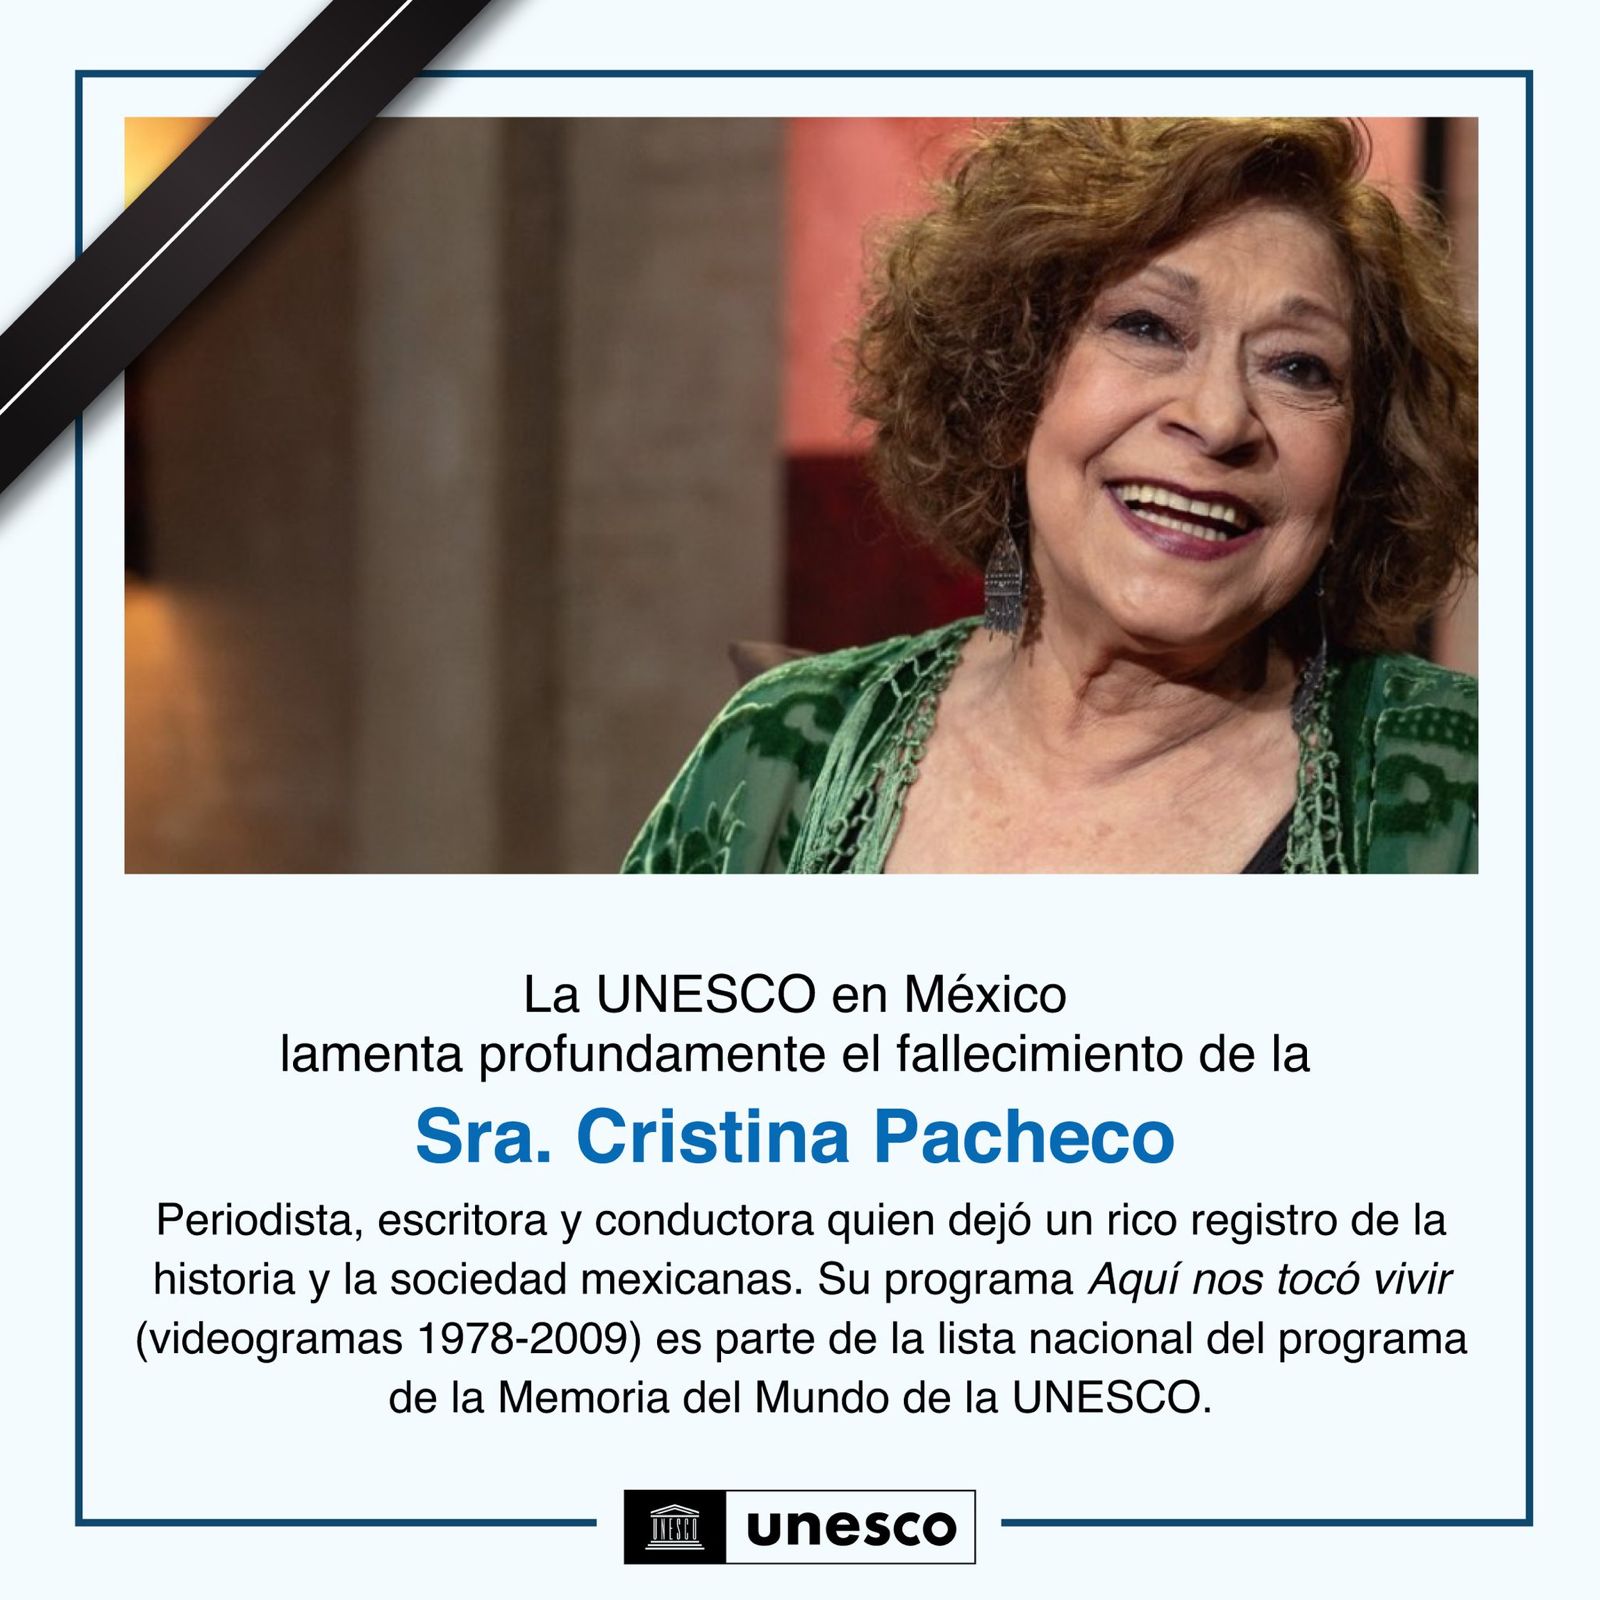 El Comité Mexicano Memoria del Mundo, UNESCO, comunica, con gran tristeza, el fallecimiento de la Sra. Cristina Pacheco